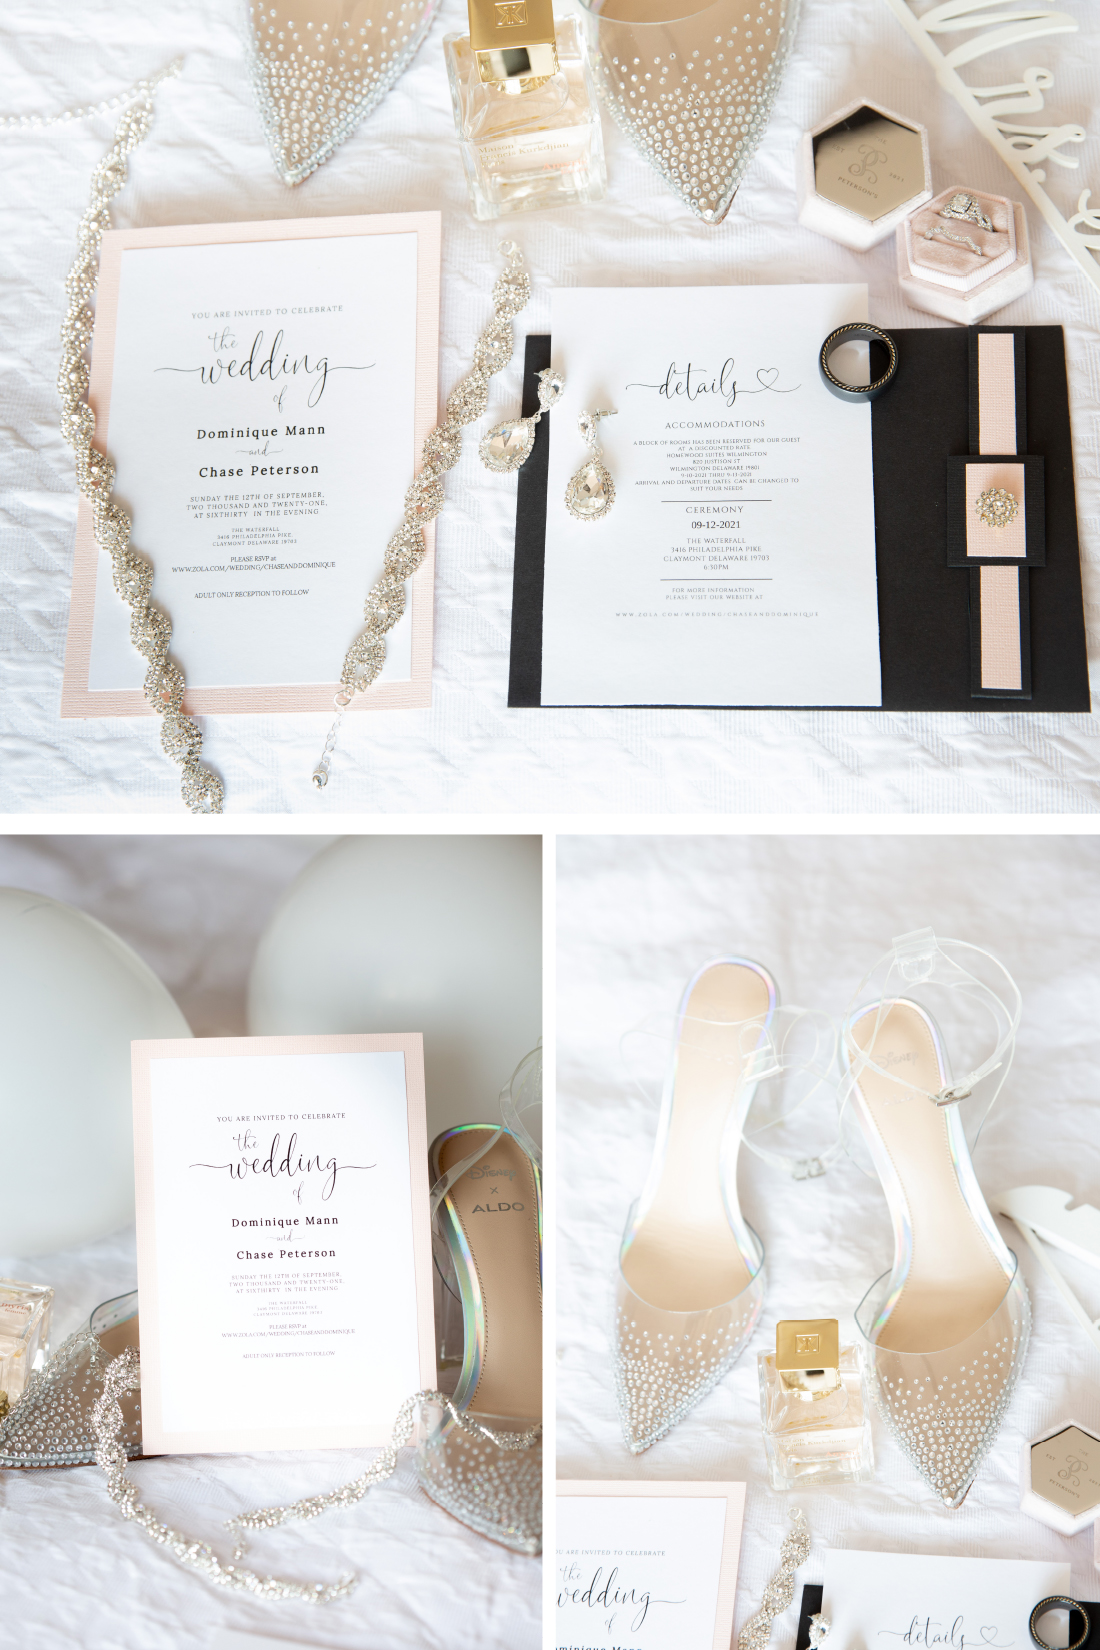 Aldo x Disney wedding shoes, invitation and details